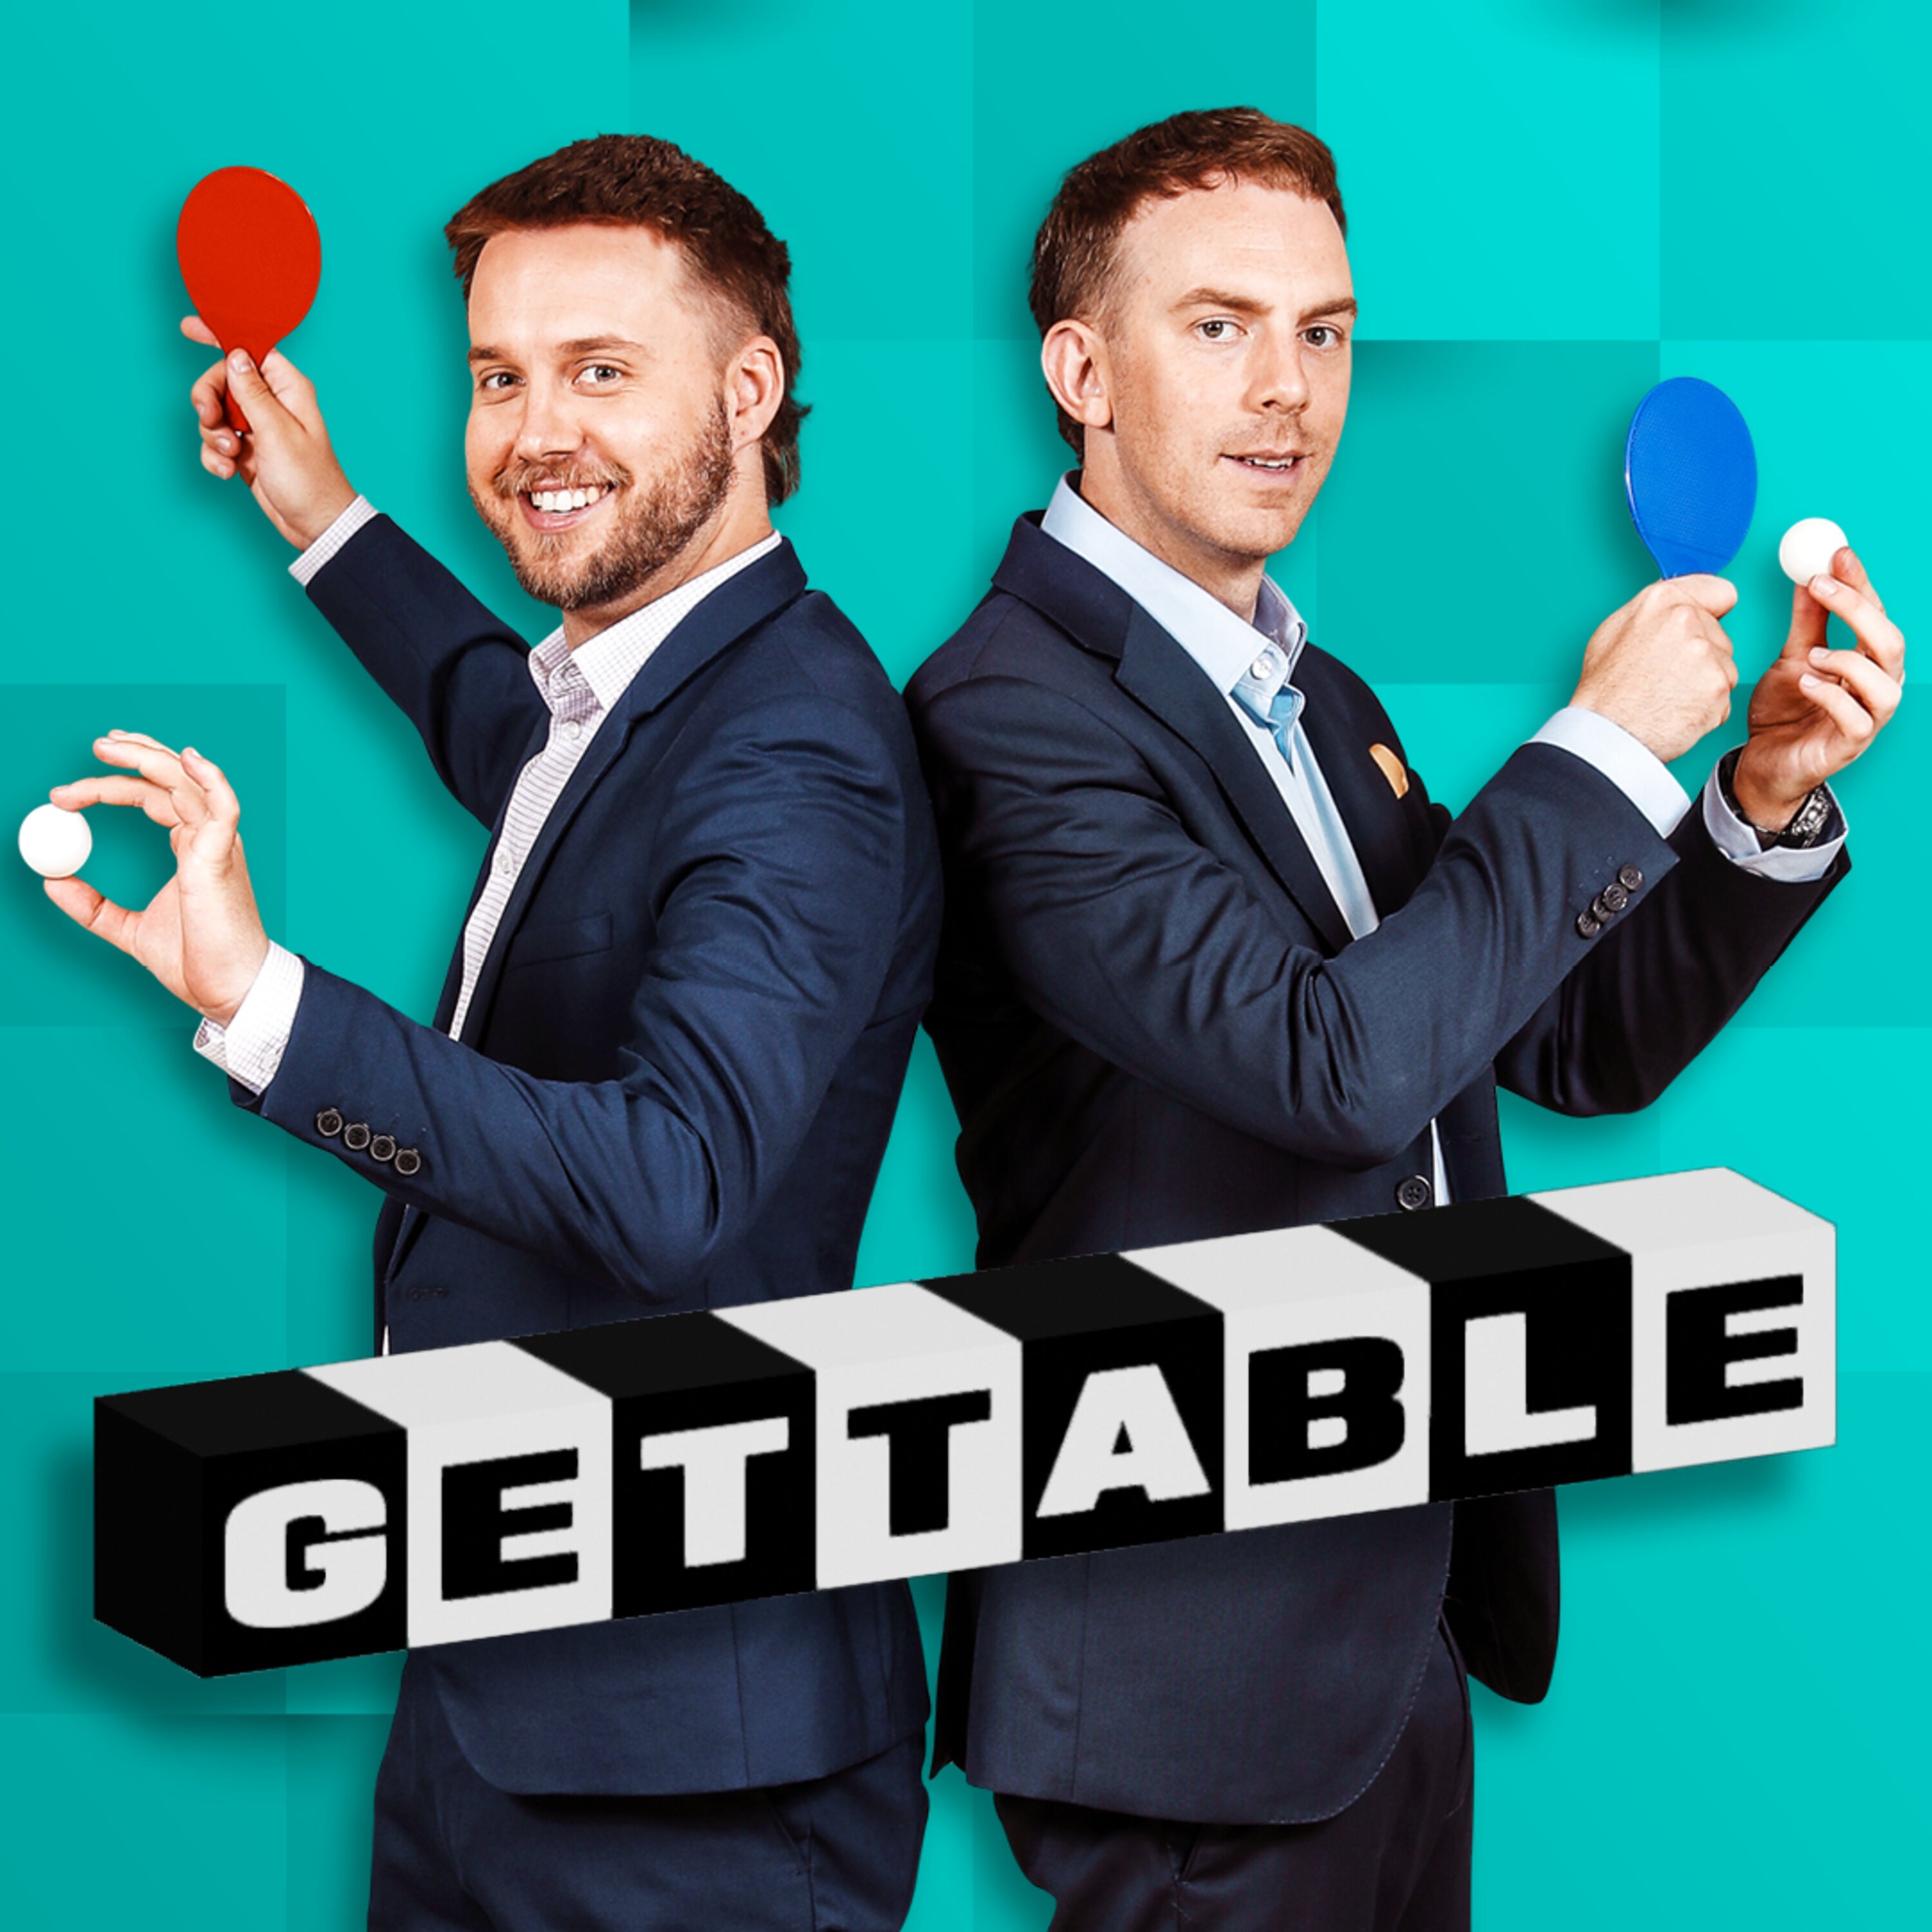 australian-podcasts.com